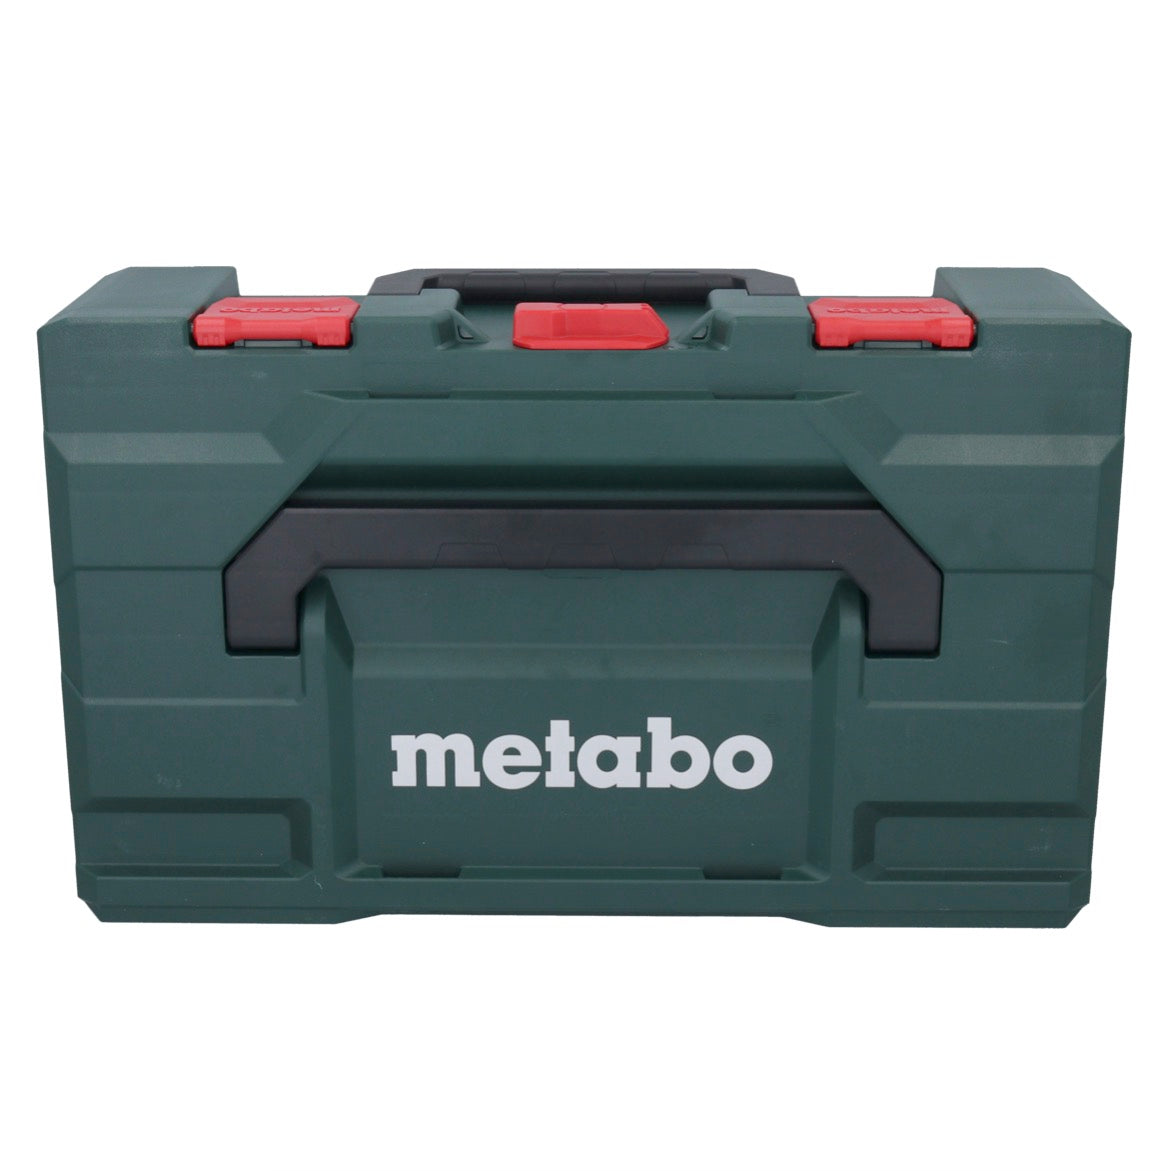 Metabo WPB 18 LT BL 11-125 Quick Akku Winkelschleifer 18 V 125 mm Brushless + 1x Akku 4,0 Ah + metaBOX - ohne Ladegerät - Toolbrothers